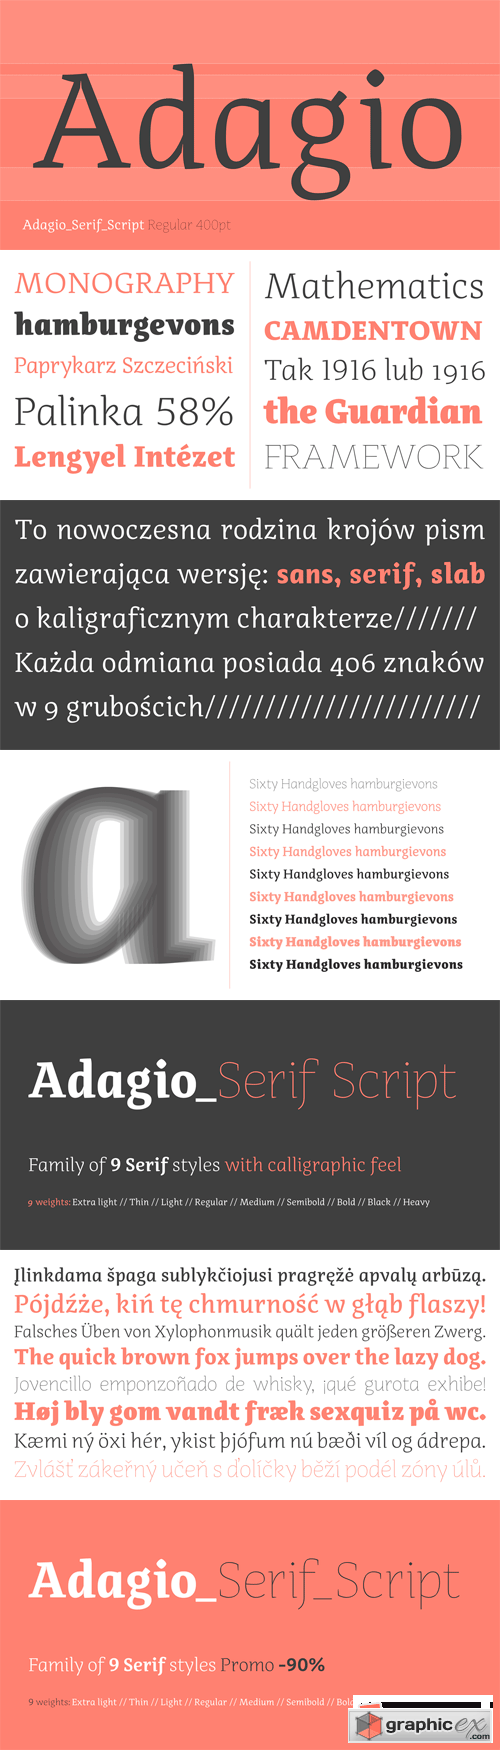 Adagio Serif Script Font Family - 9 Fonts for $140